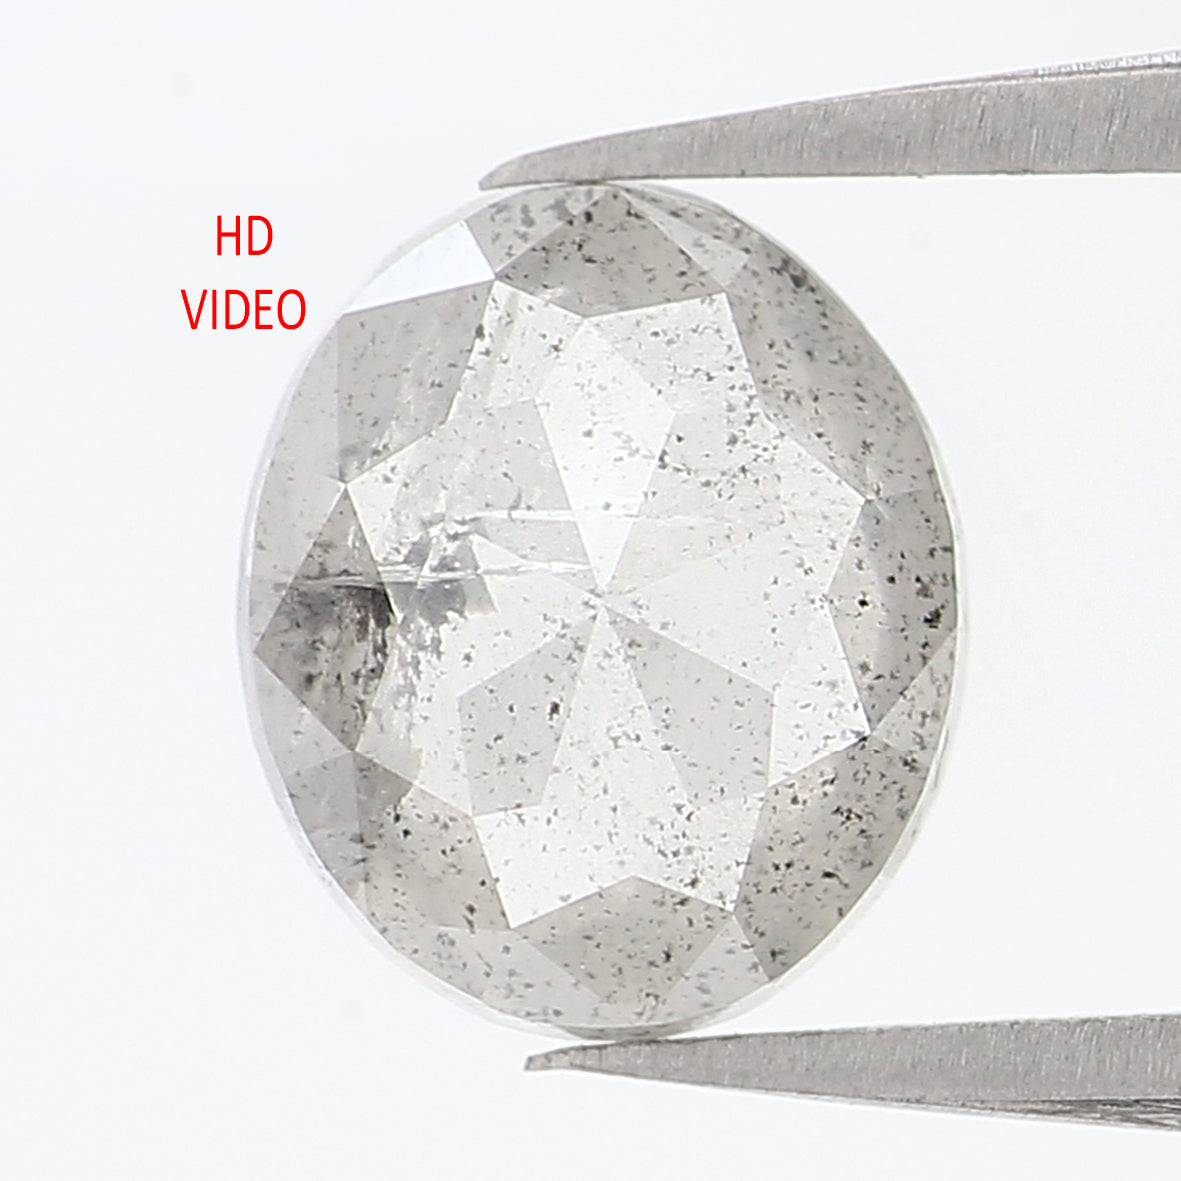 1.03 Ct Natural Loose Oval Shape Diamond Black Grey Color Oval Cut Diamond 7.00 MM Natural Loose Salt and Pepper Oval Shape Diamond QL1098